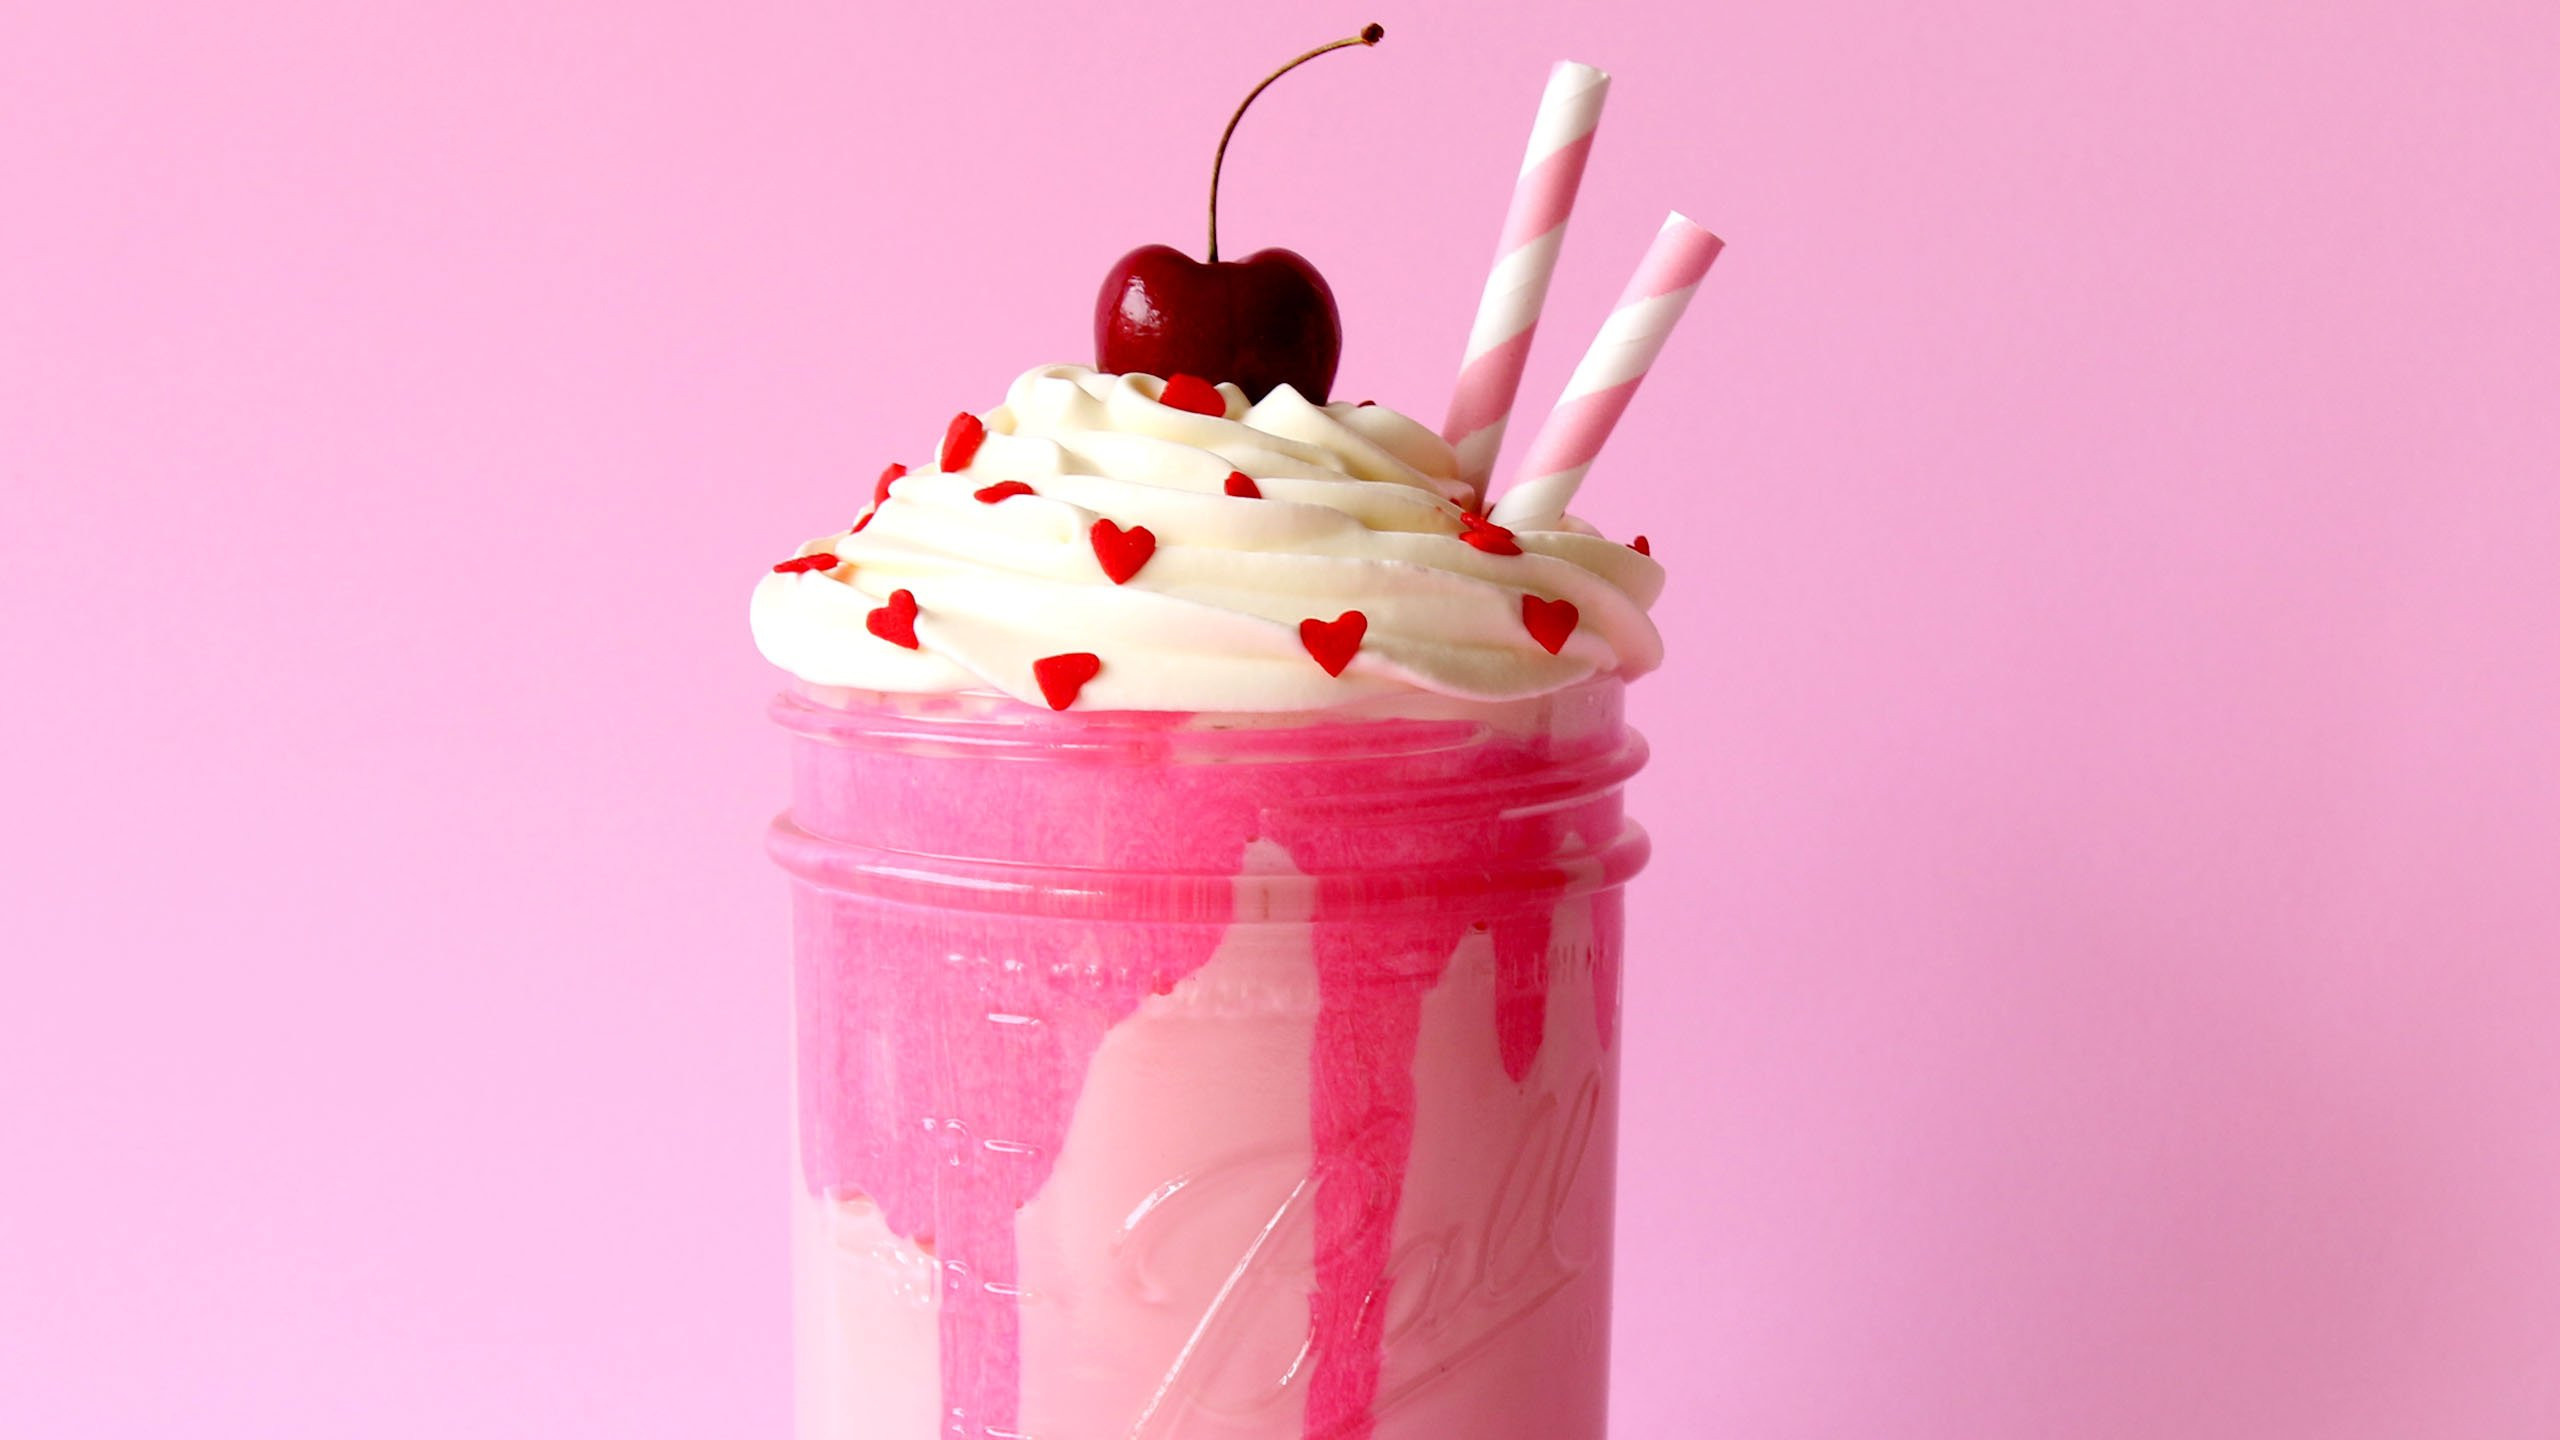 Milkshake: Beverage, Mixing milk with a flavoring or fruit. 2560x1440 HD Wallpaper.